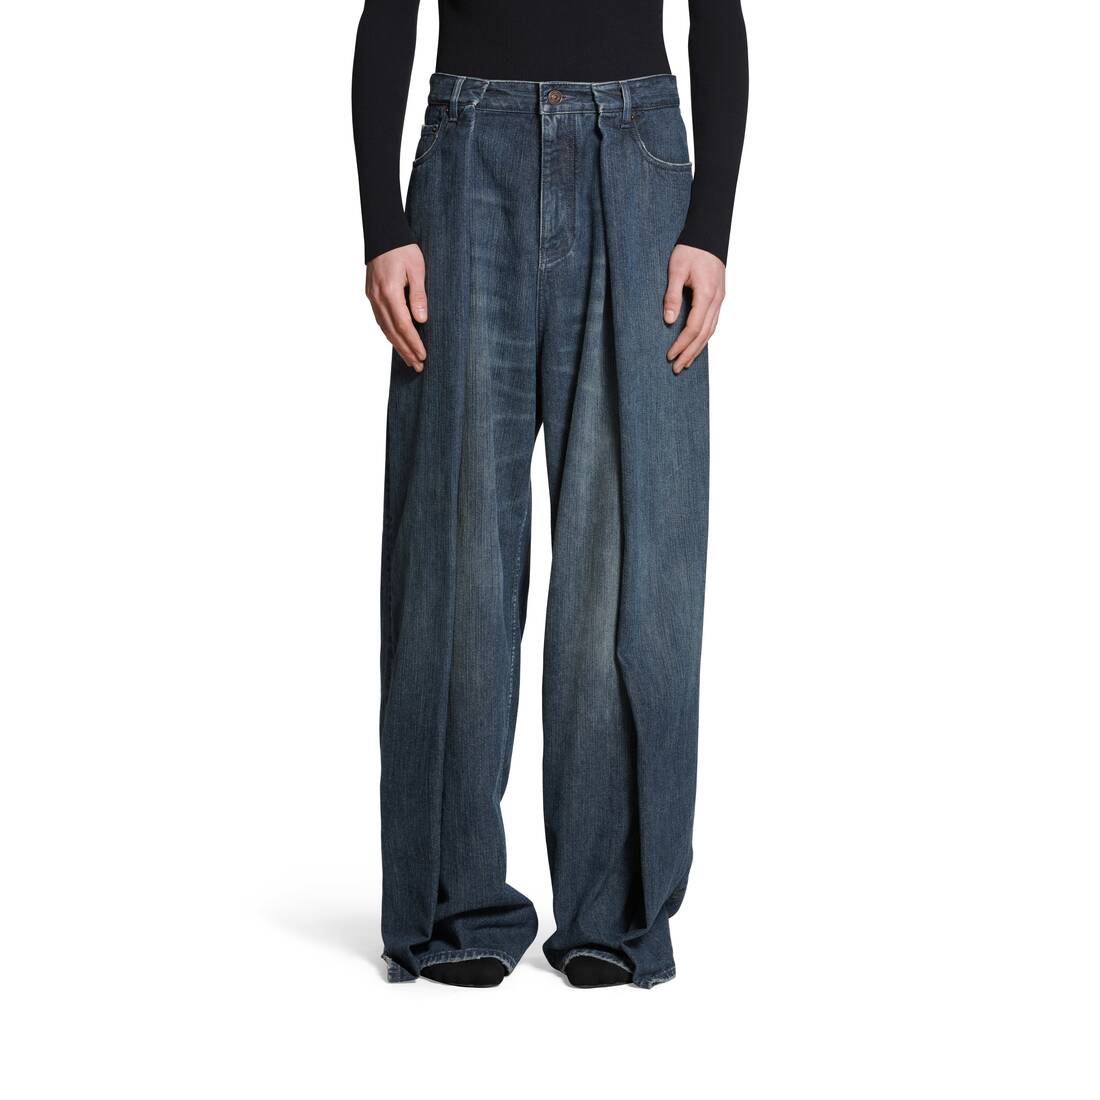 Balenciaga Paris Black Wrinkle Fabric Exposed Zipper Closure Pants Trousers  38 | eBay